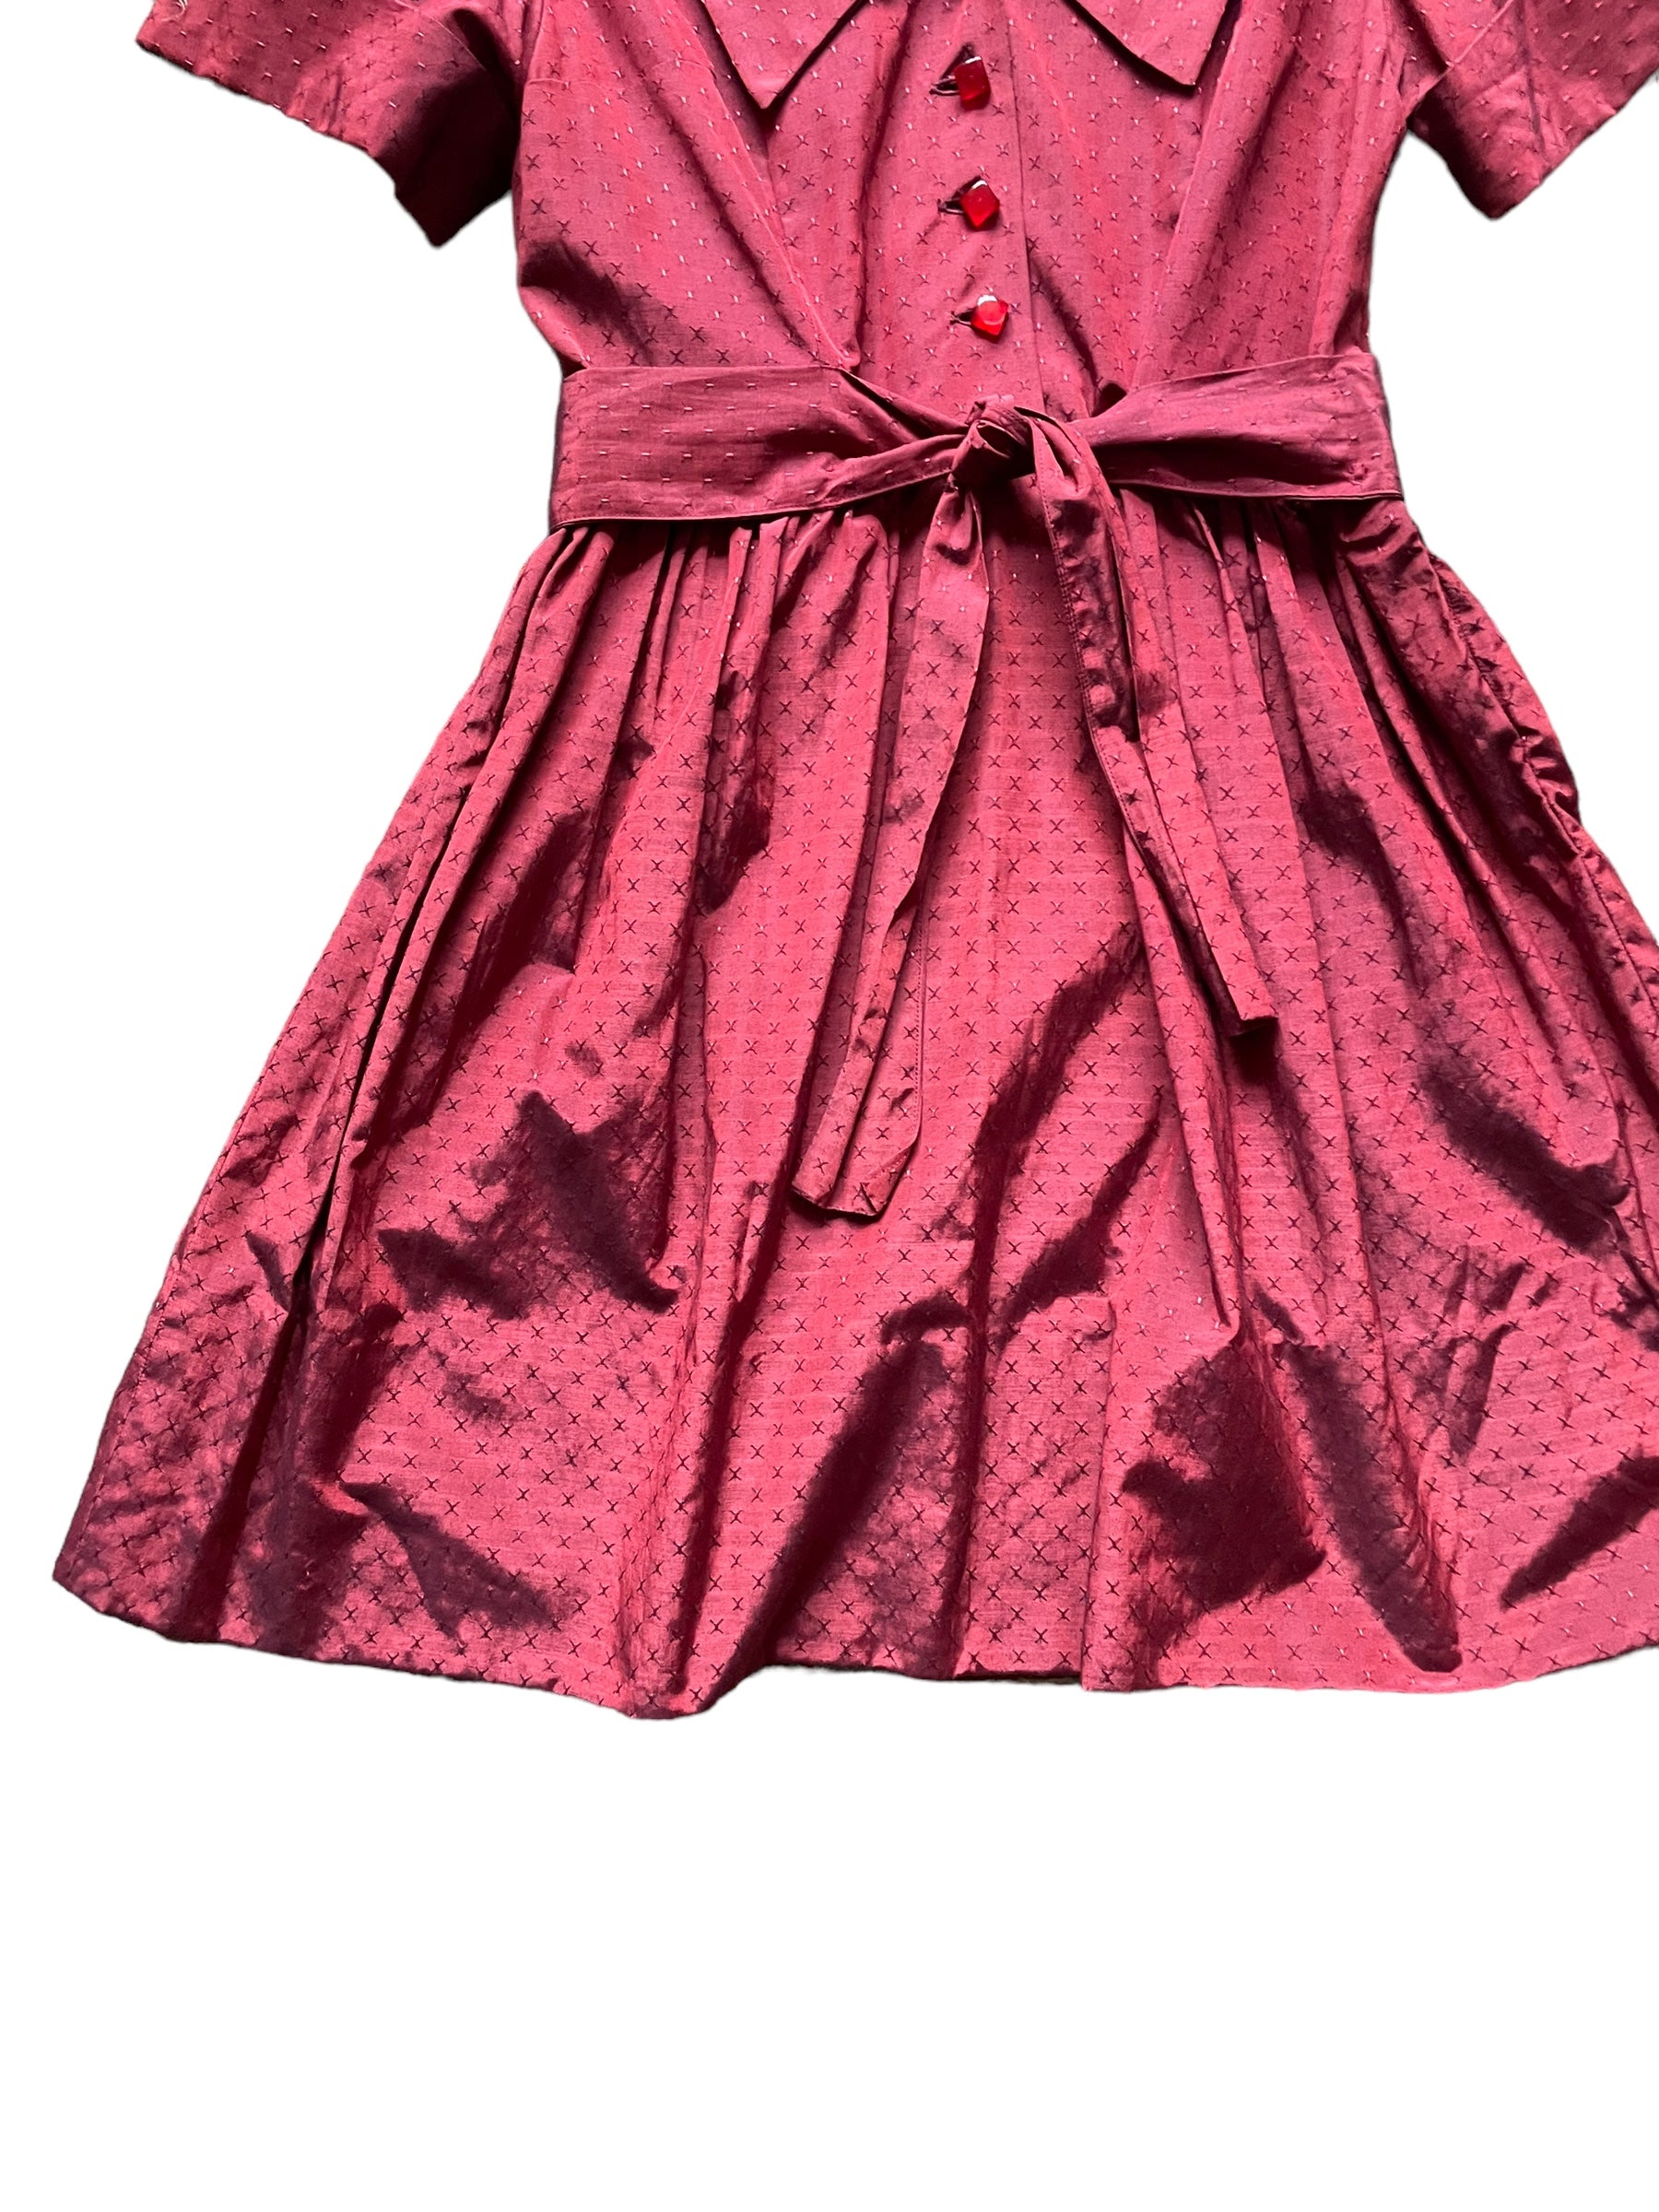 Front skirt view of Vintage 1950s Handmade Red Satin Dress  SZ M |  Barn Owl Vintage Dresses | Seattle Ladies Vintage Clothing